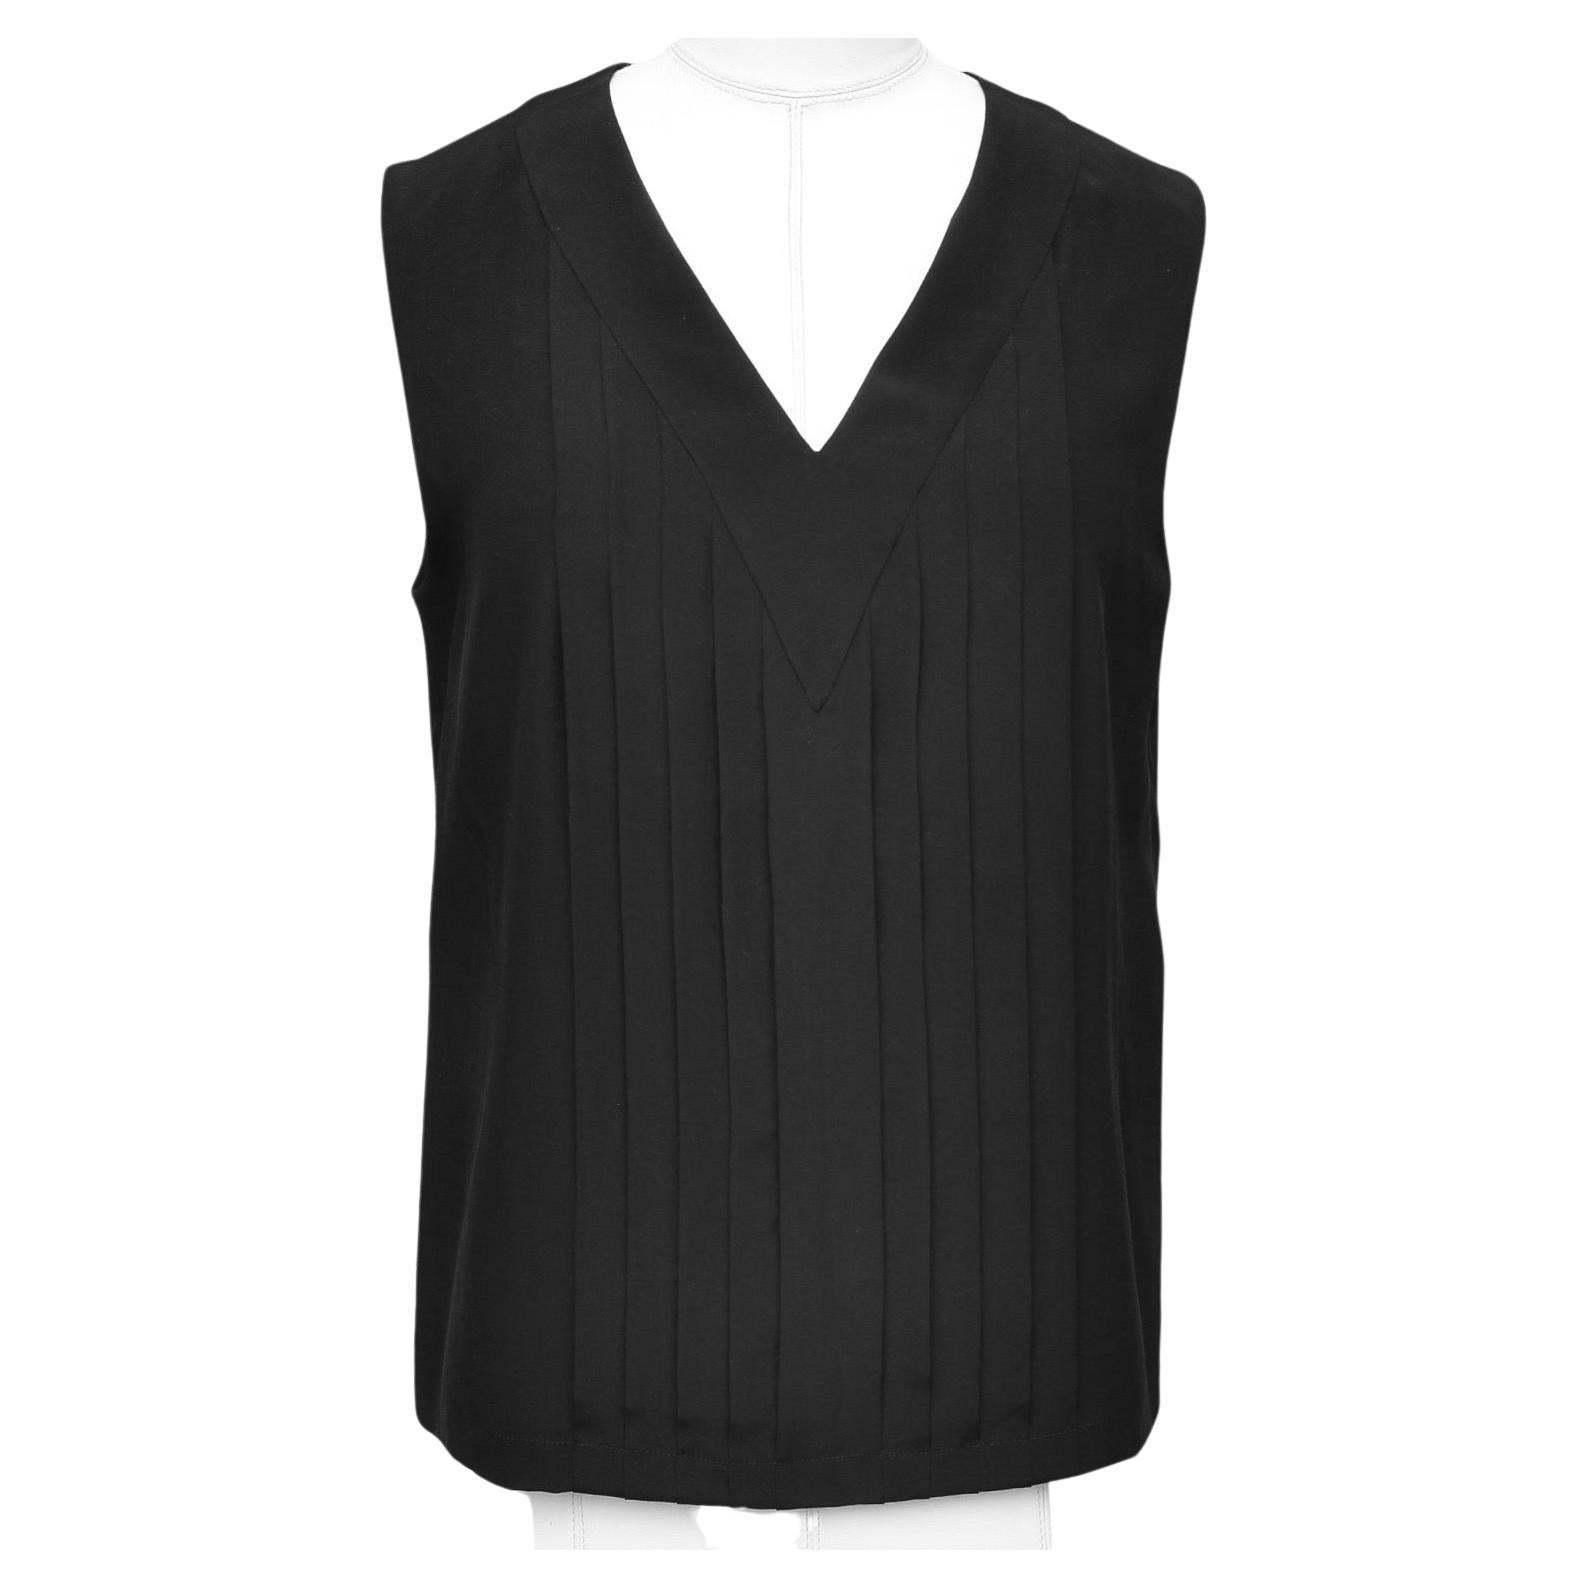 CHANEL Black Silk Blouse Sleeveless Top Shirt Pleats V-Neck Buttons Sz 36